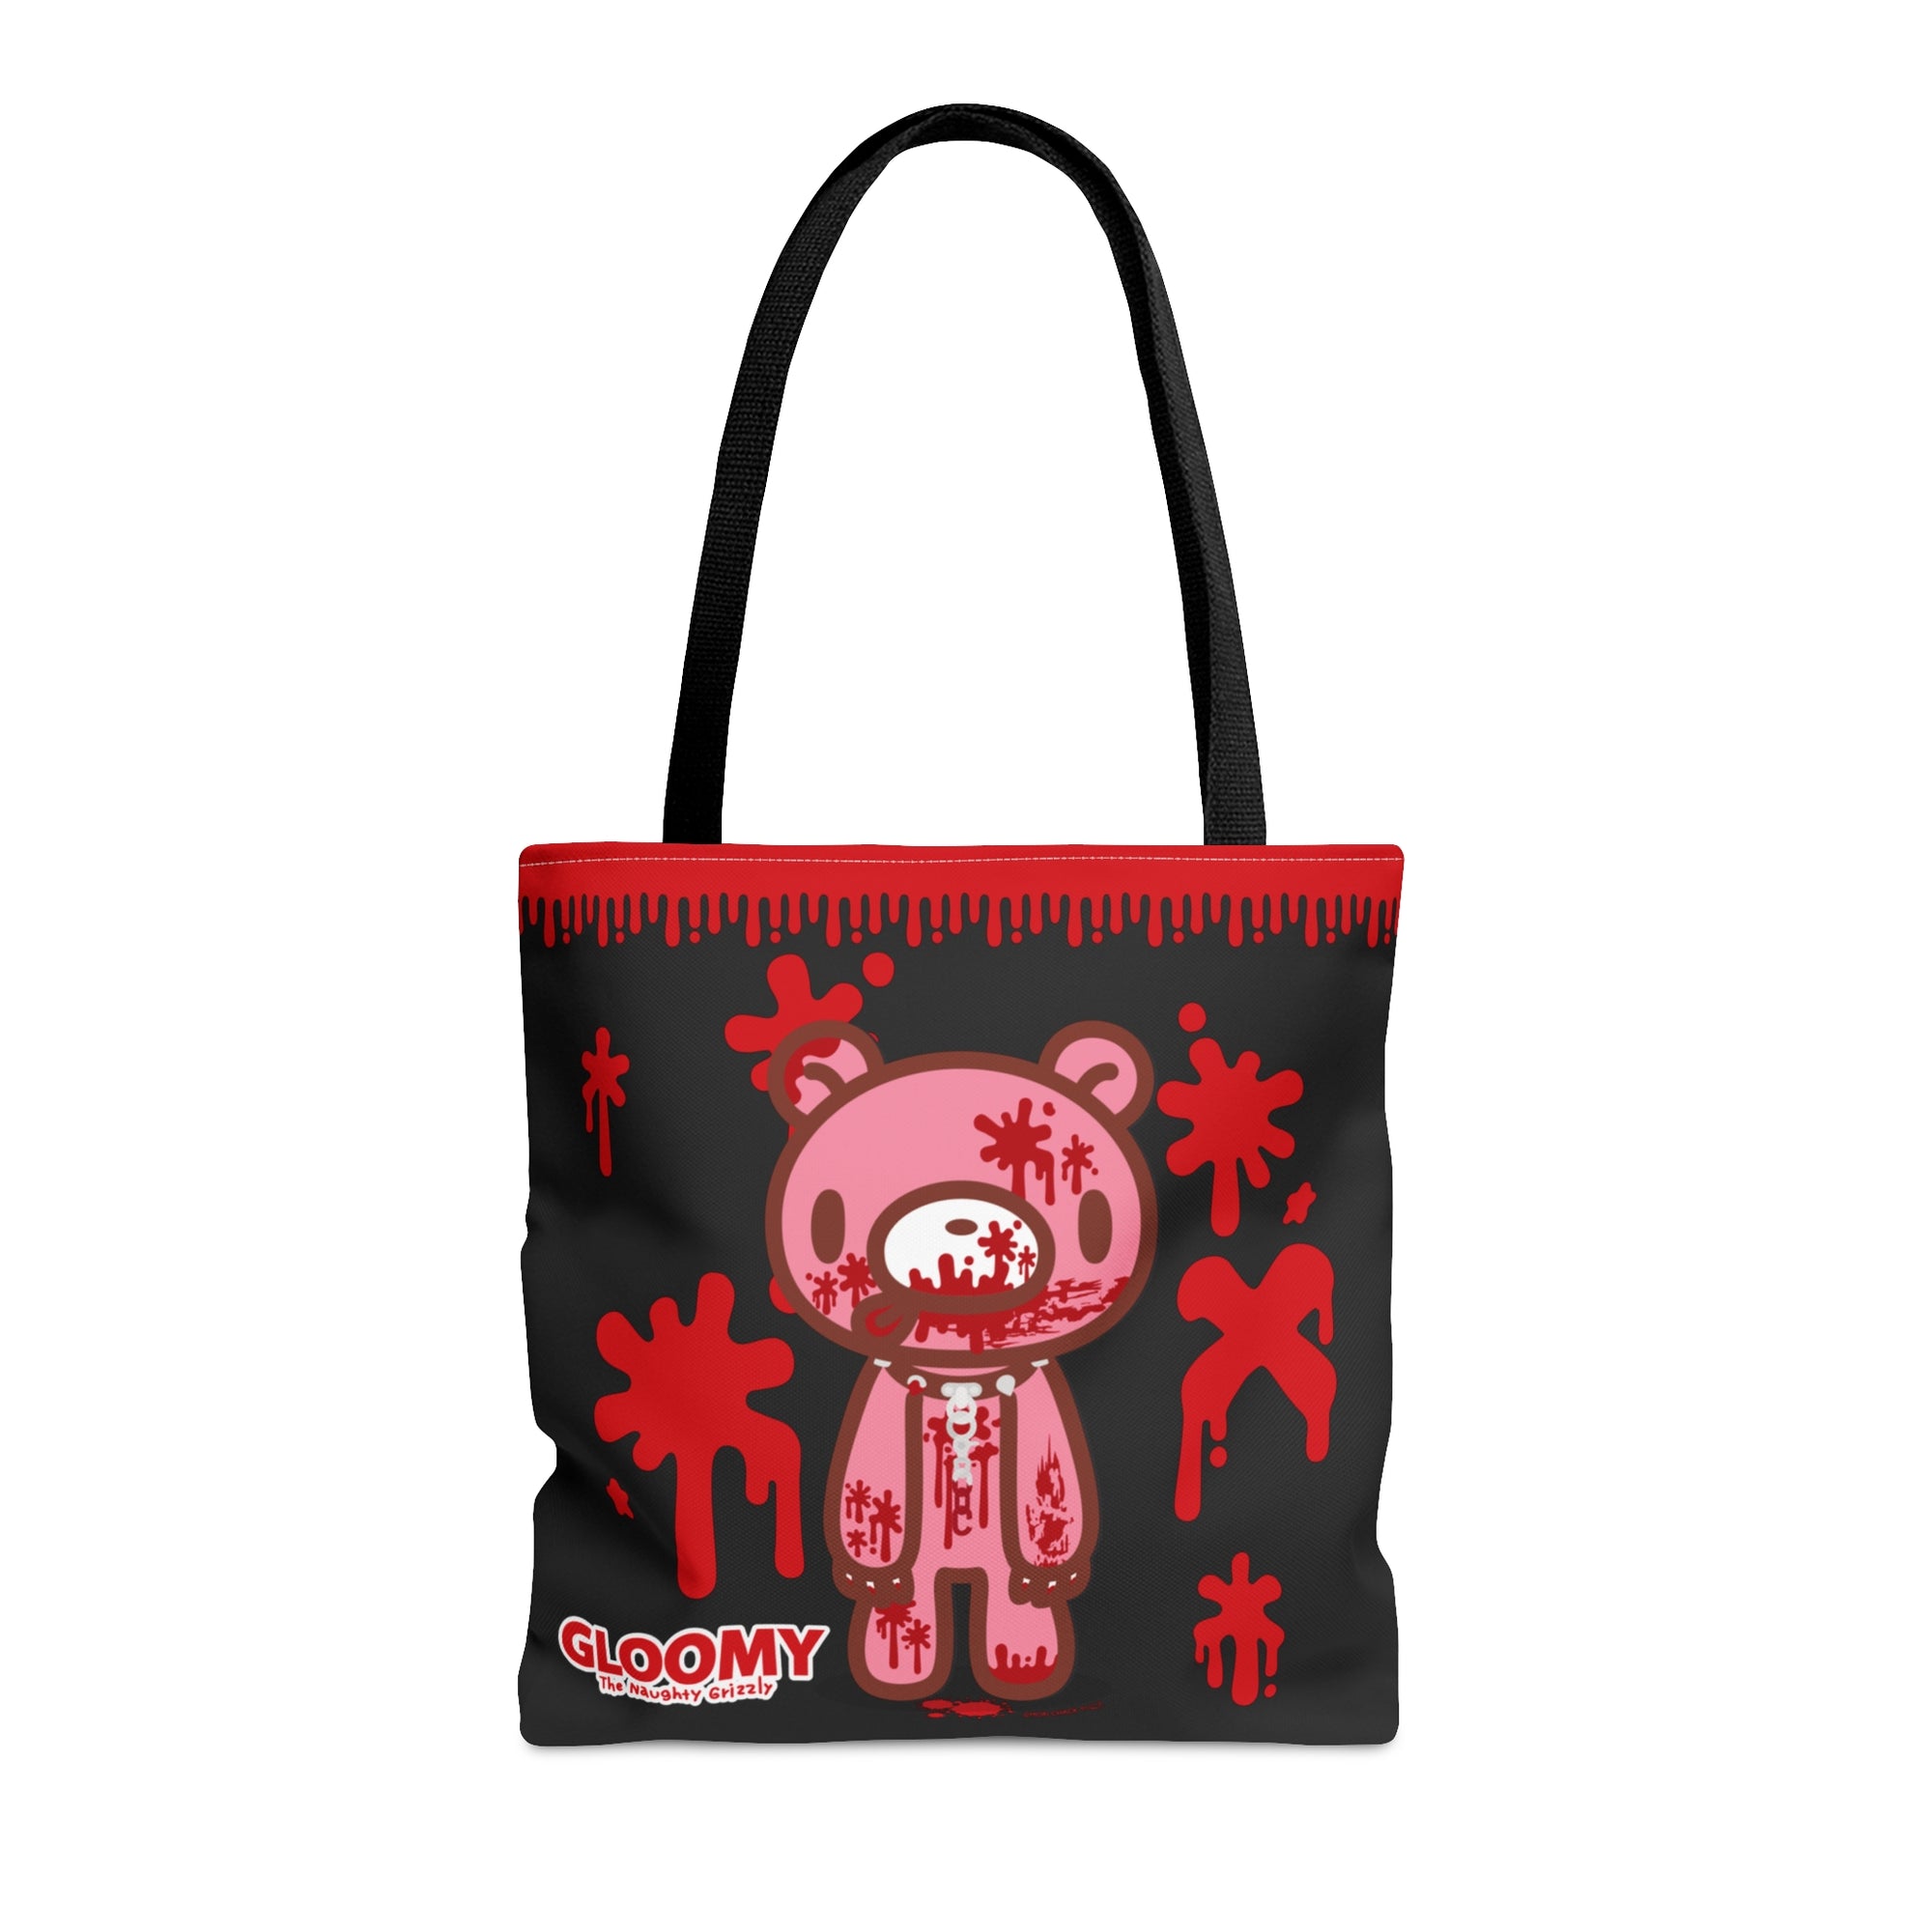 Bloody Gloomy Bear Canvas Tote Bag